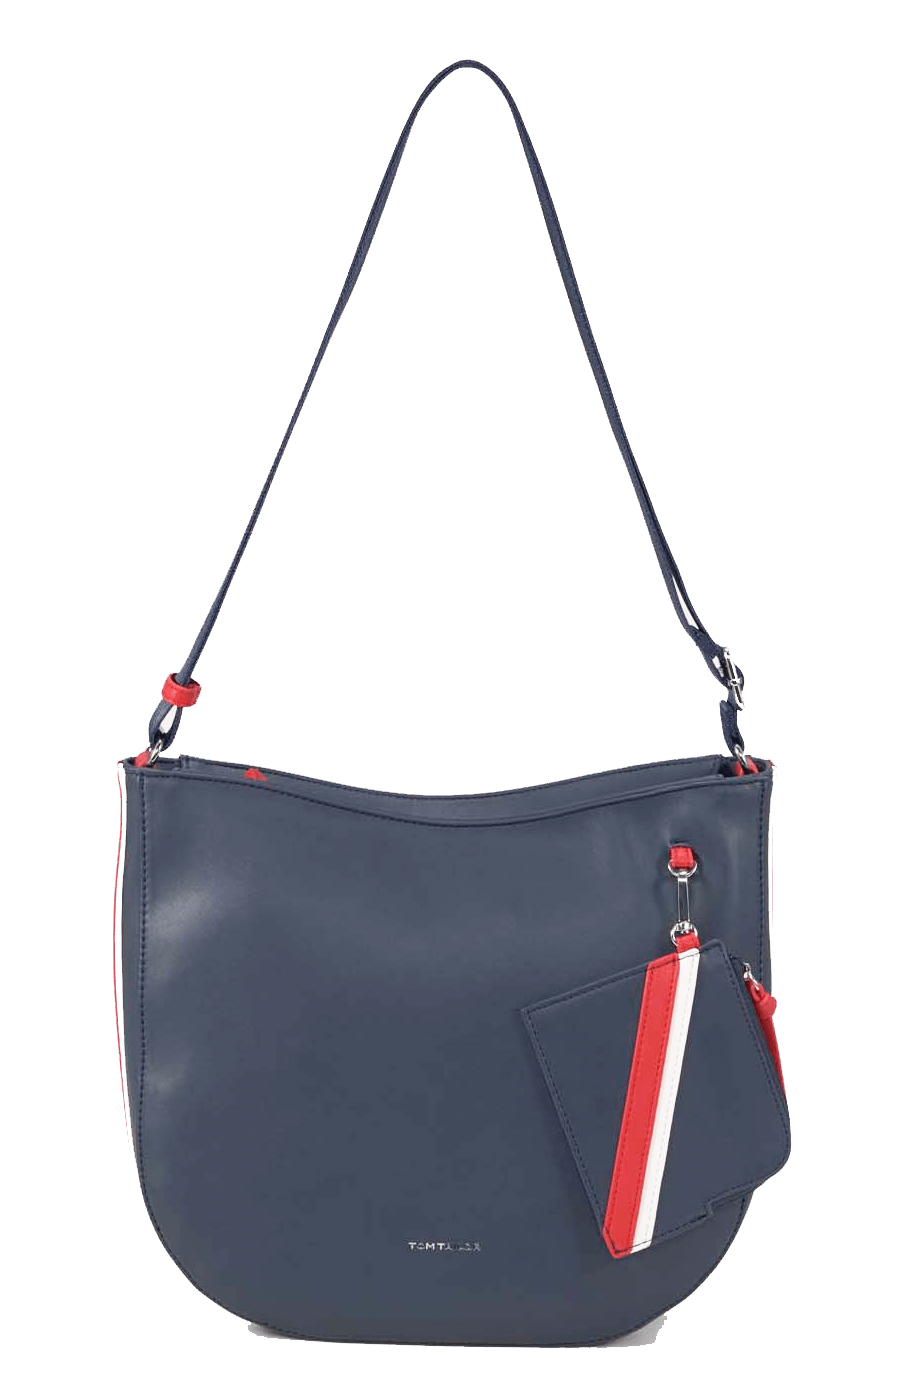 Tom Tailor, große Multi - Pocket Damentasche / Umhängetasche, mixed maritim